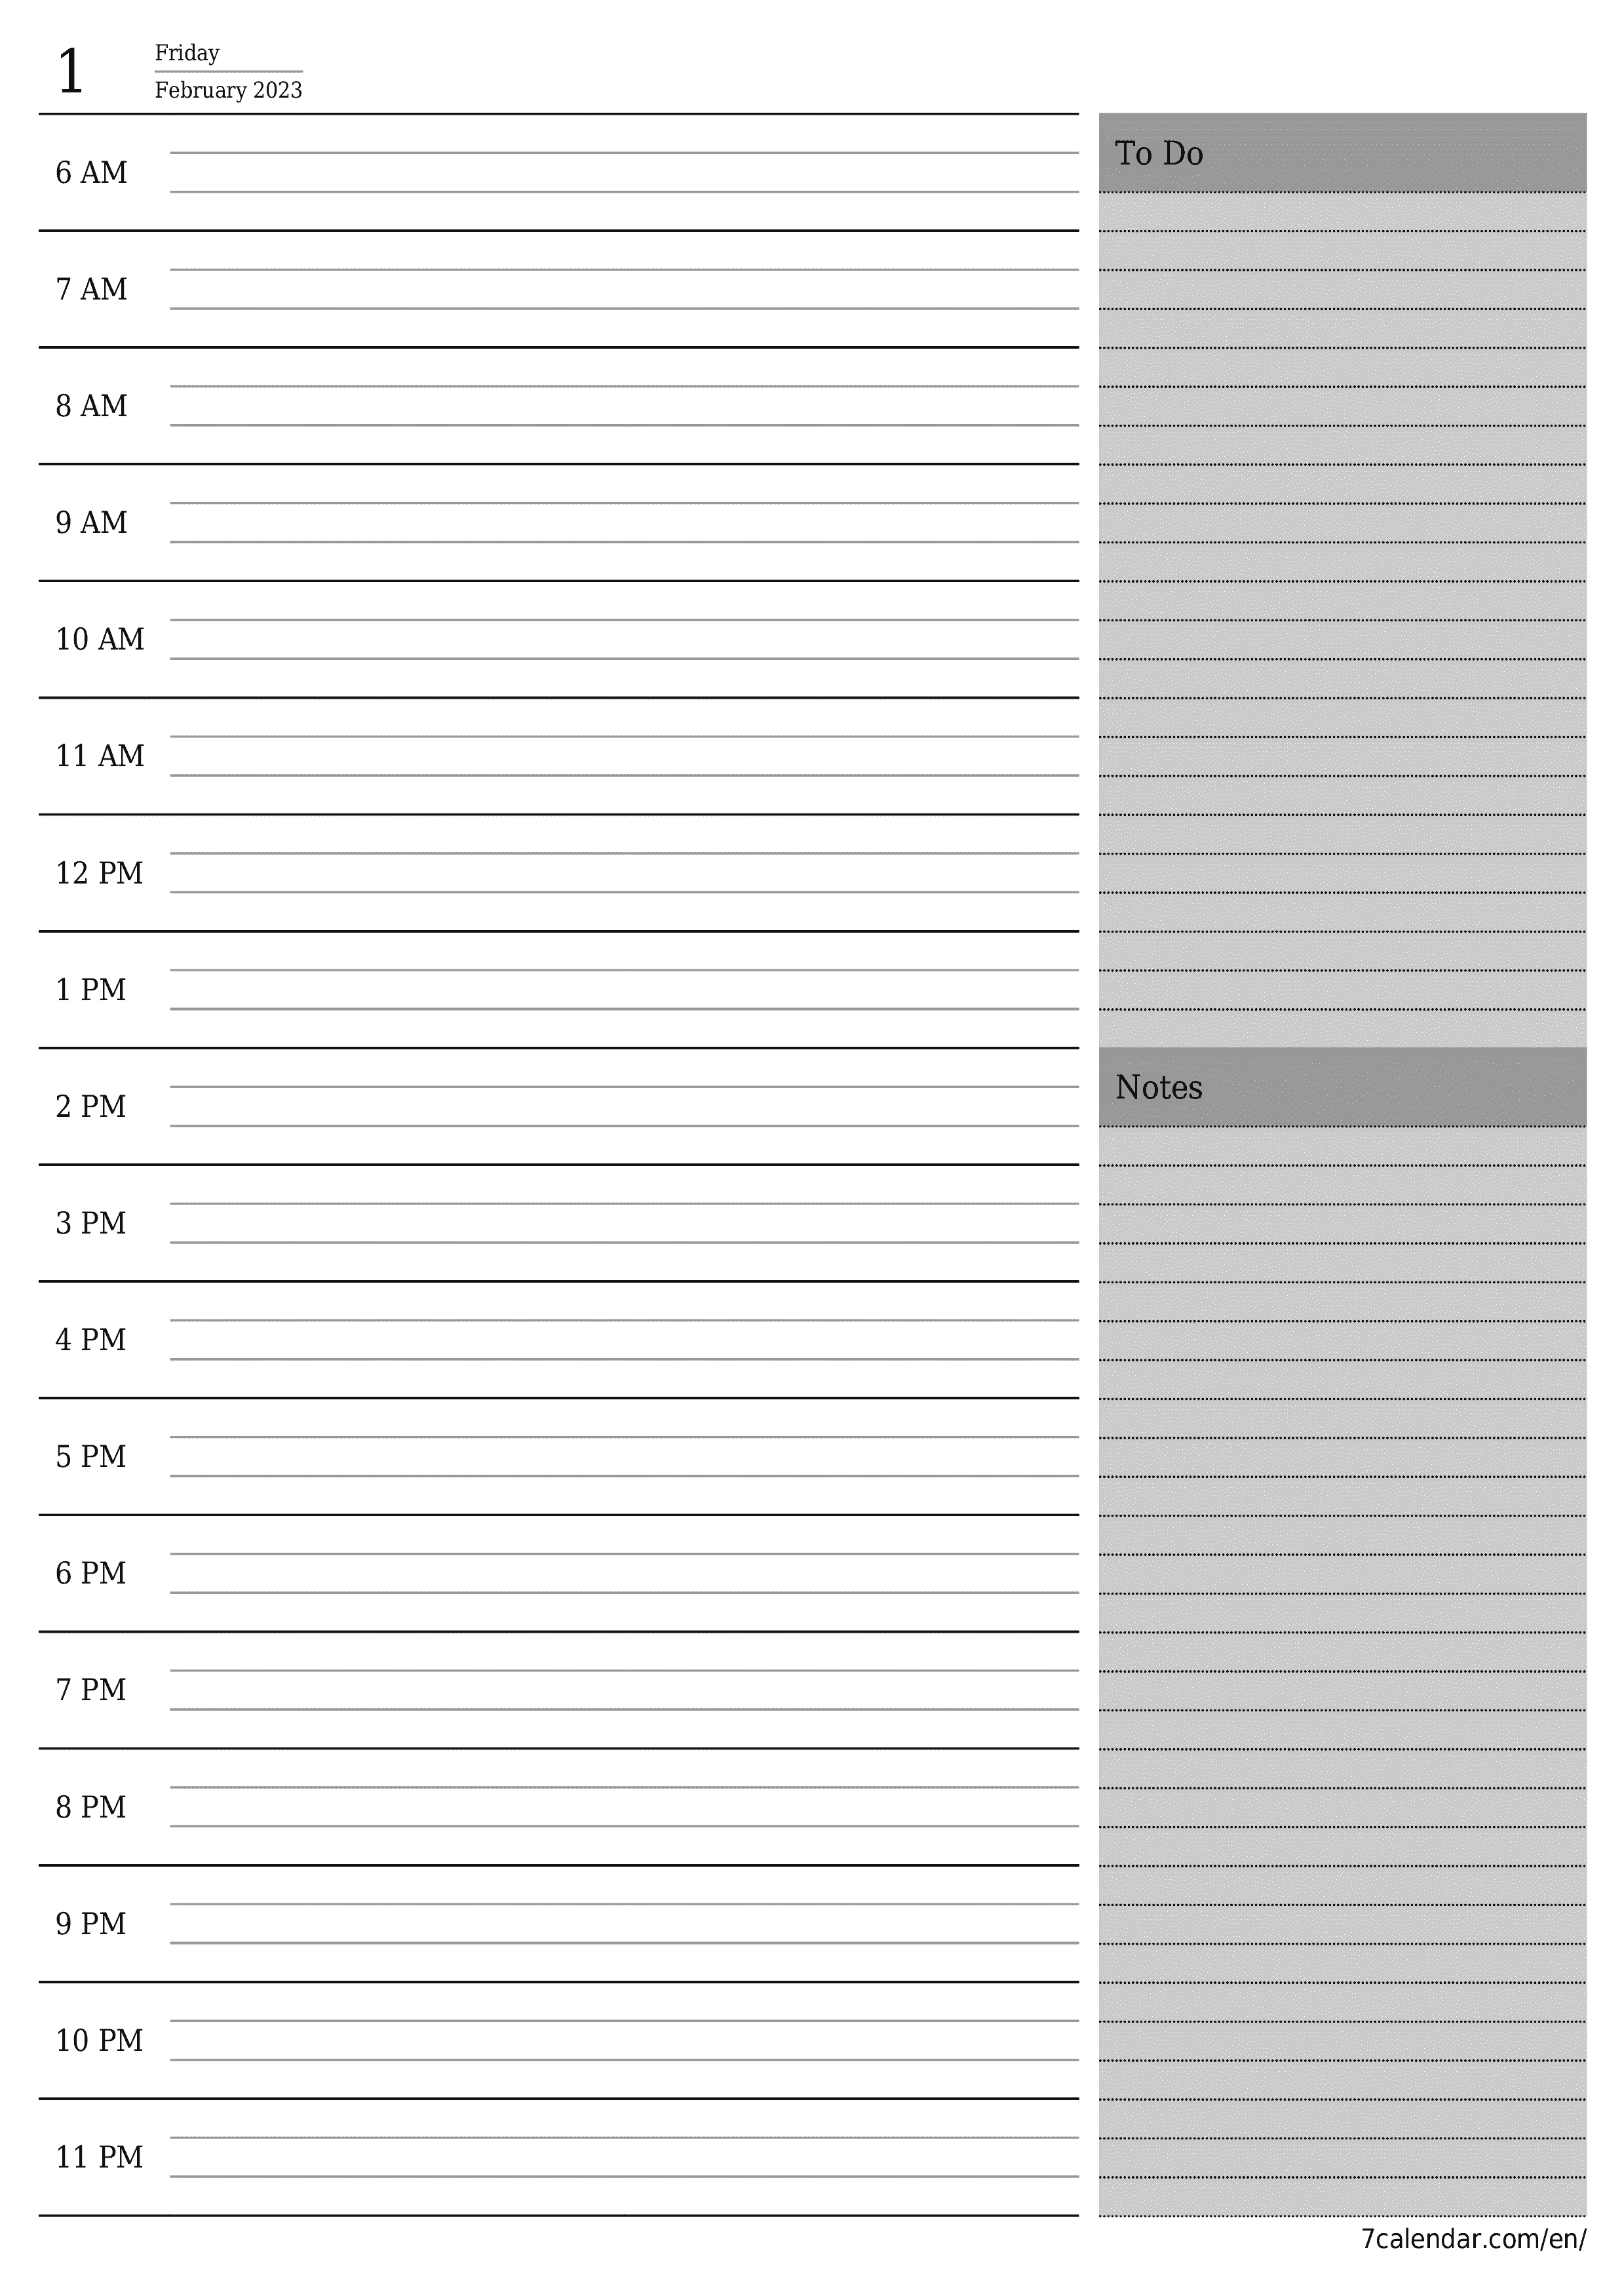 Blank calendar February 2023